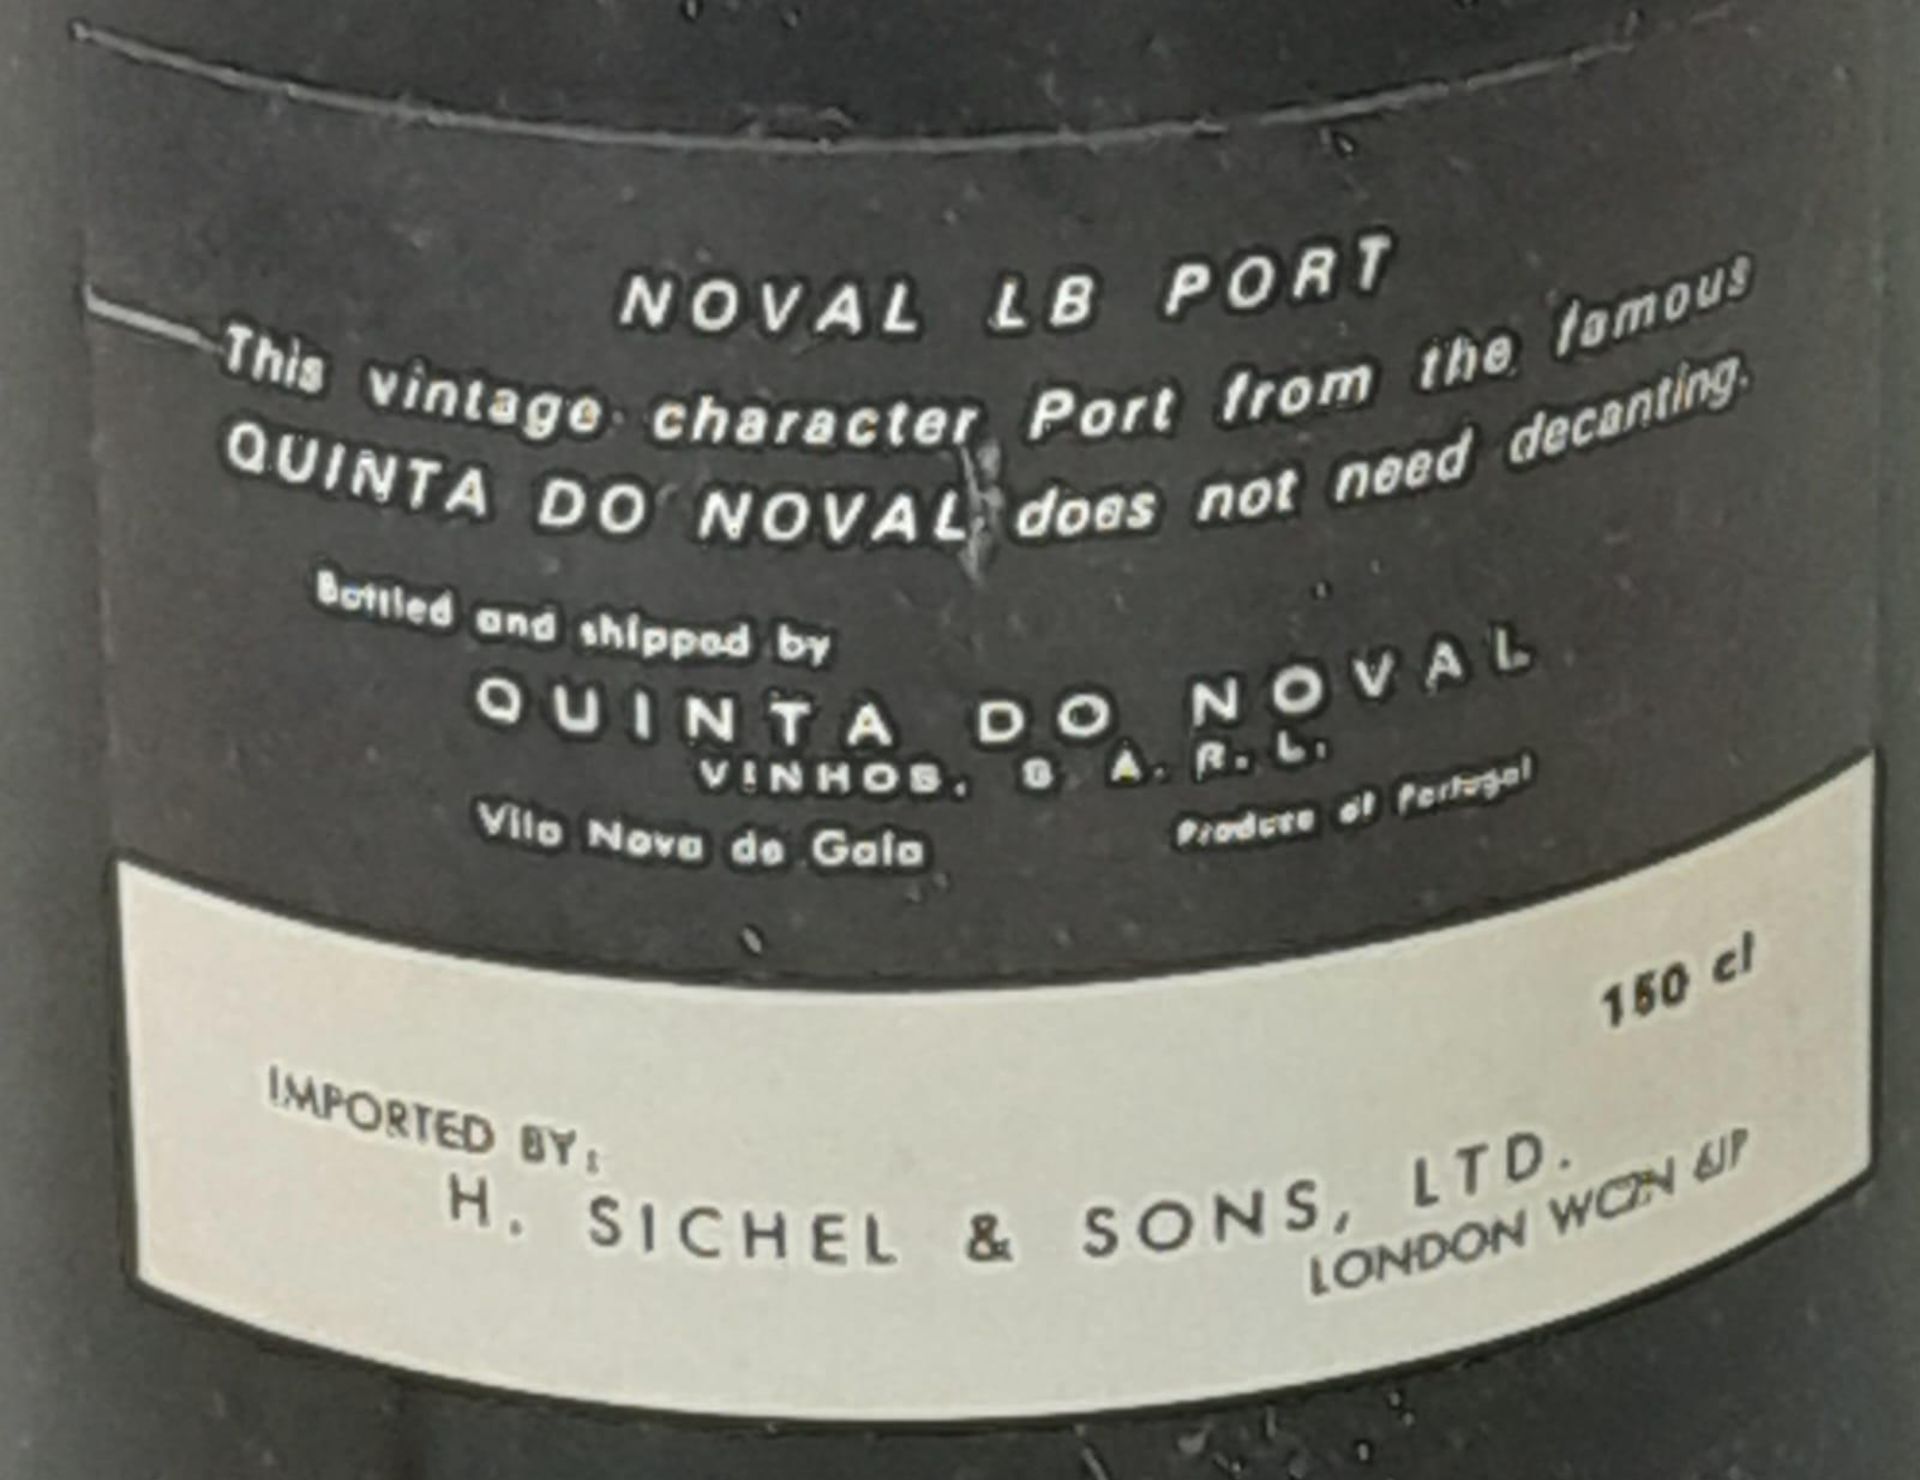 A Large Bottle of Noval LB Port in a Wooden Case - 150cl. - Image 4 of 7